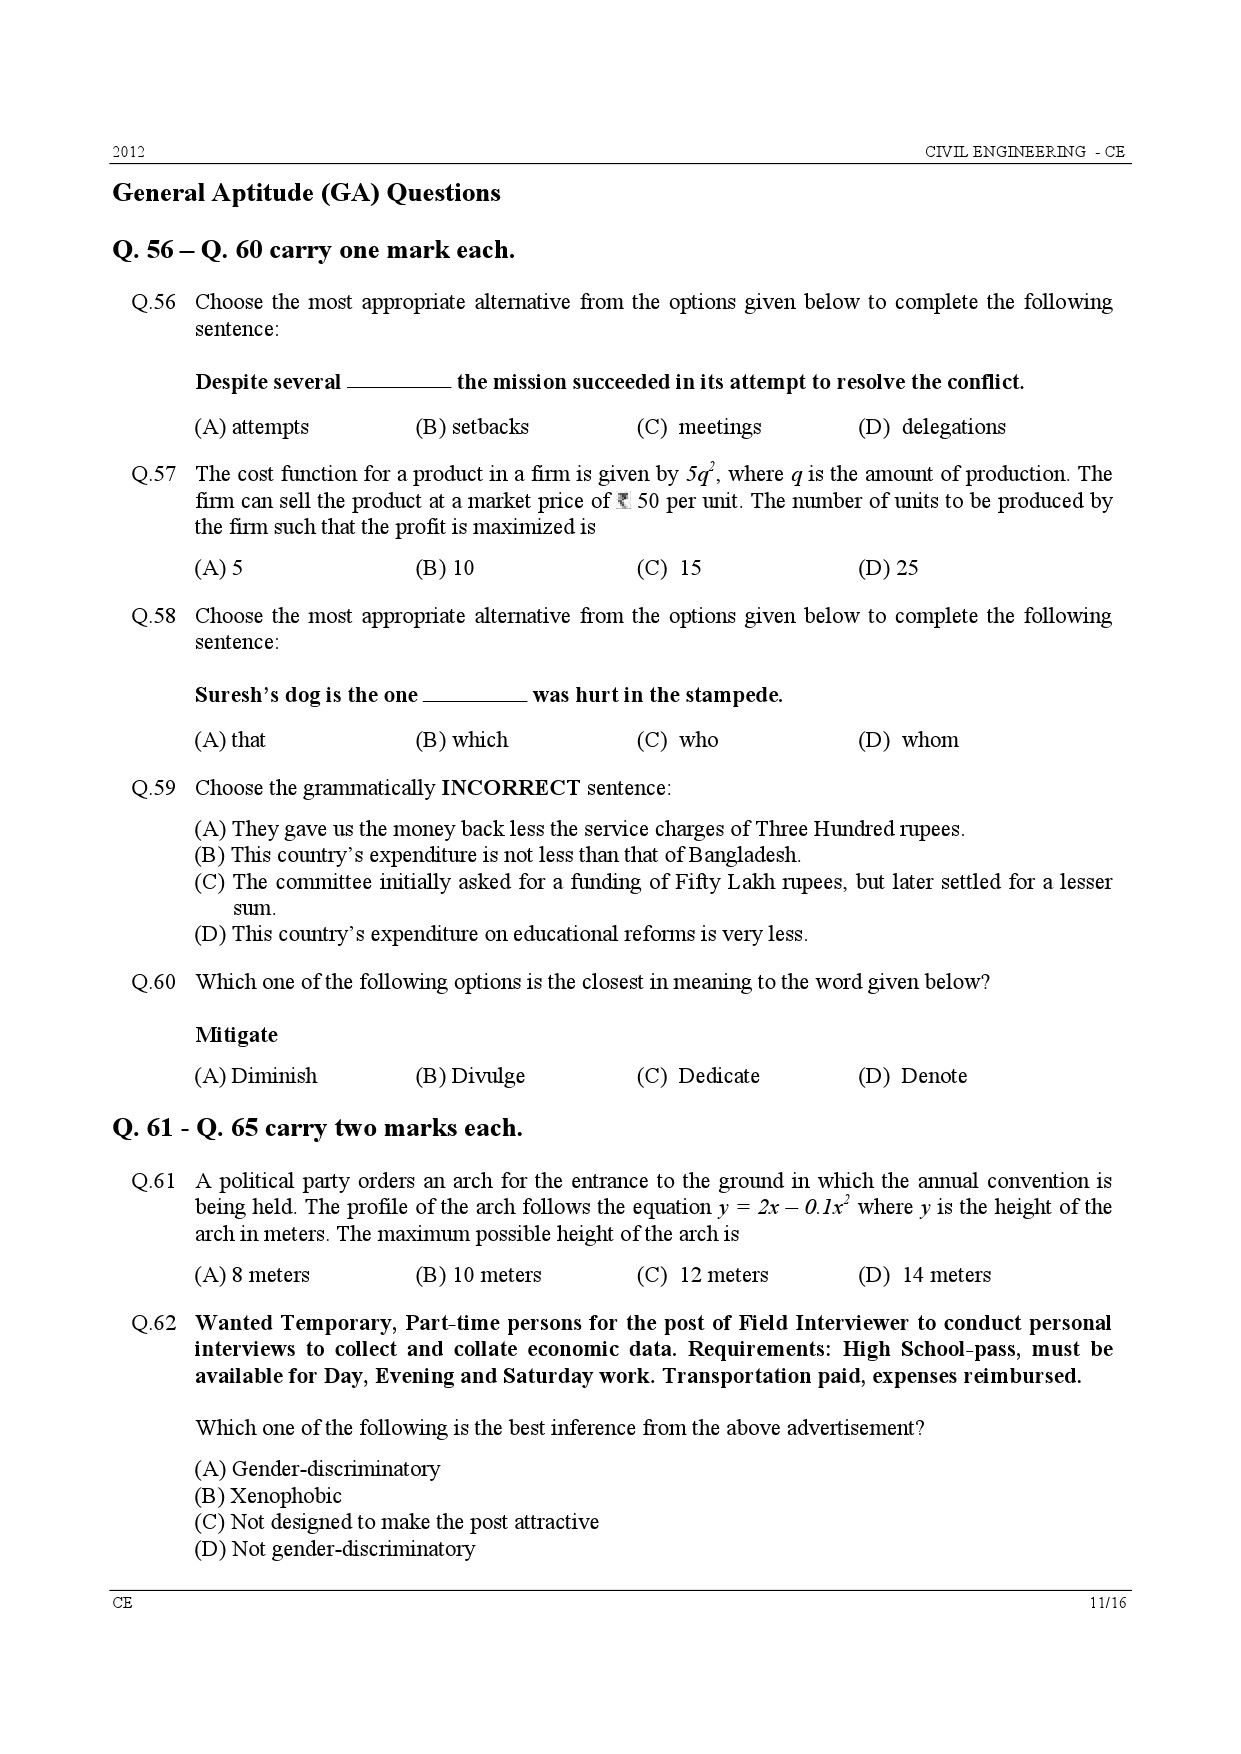 GATE Exam Question Paper 2012 Civil Engineering 11